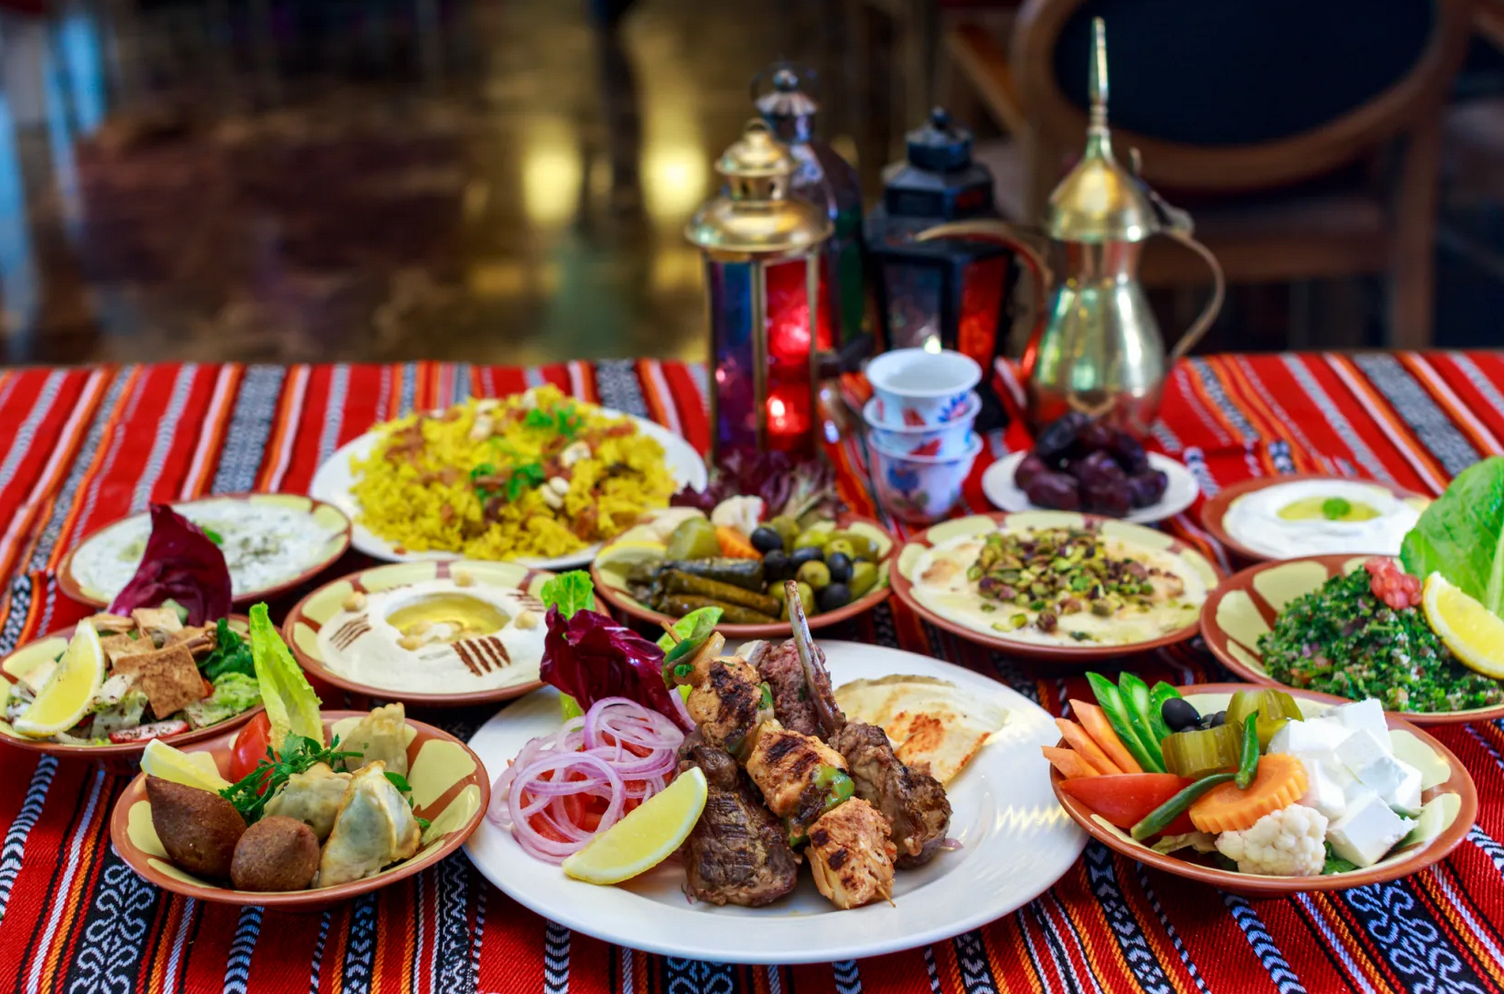 Best iftar meals in al barsha